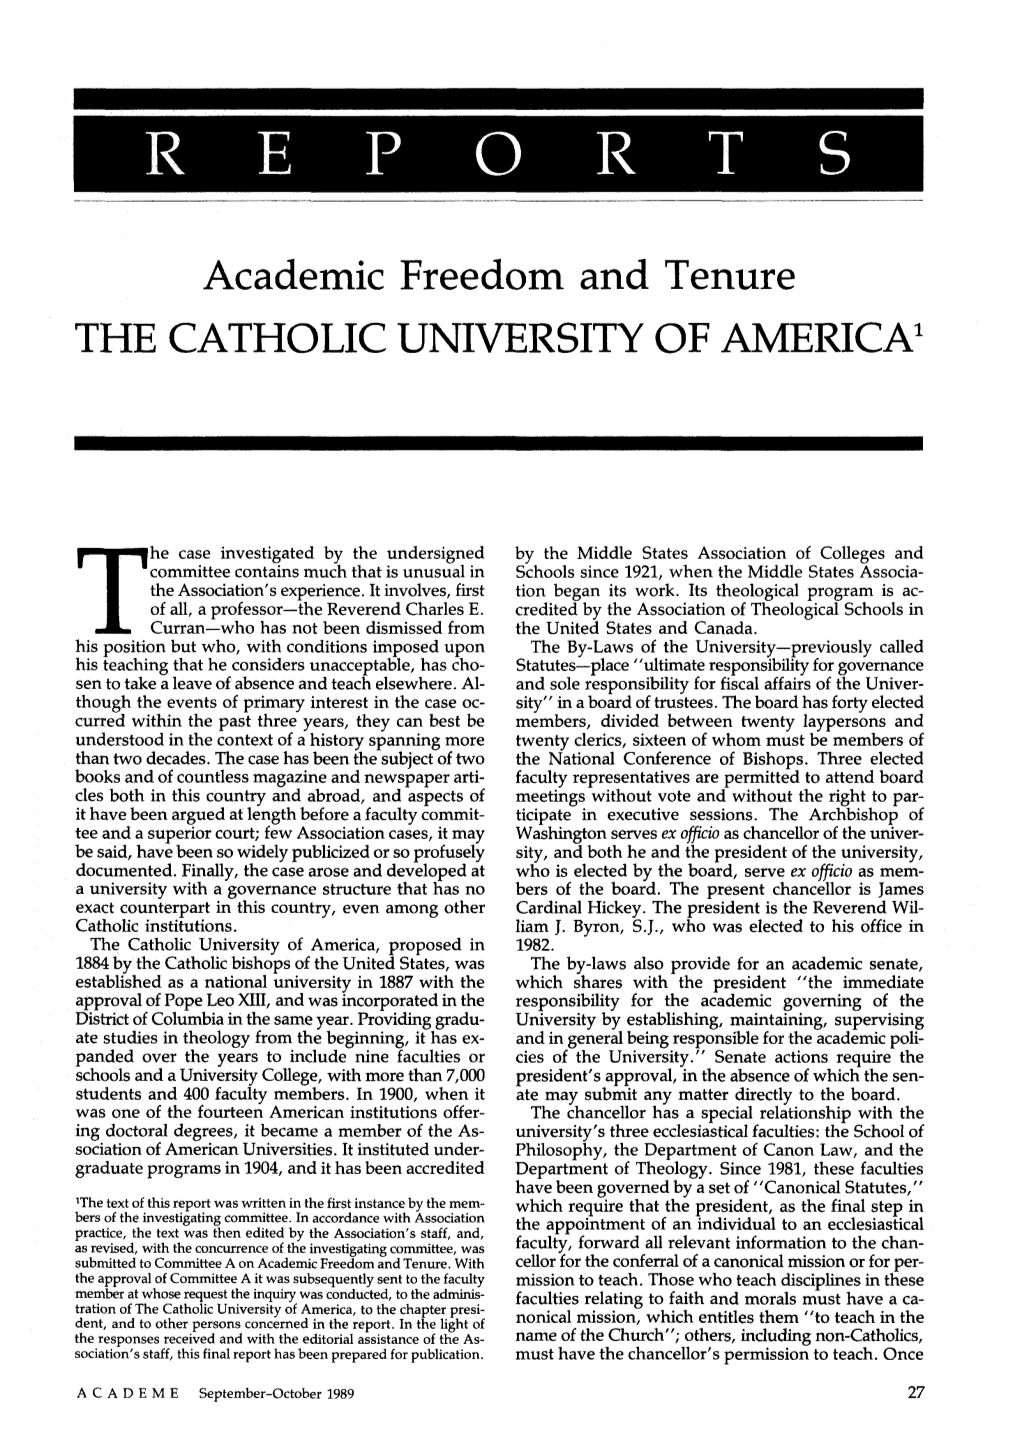 Academic Freedom and Tenure: the Catholic University of America